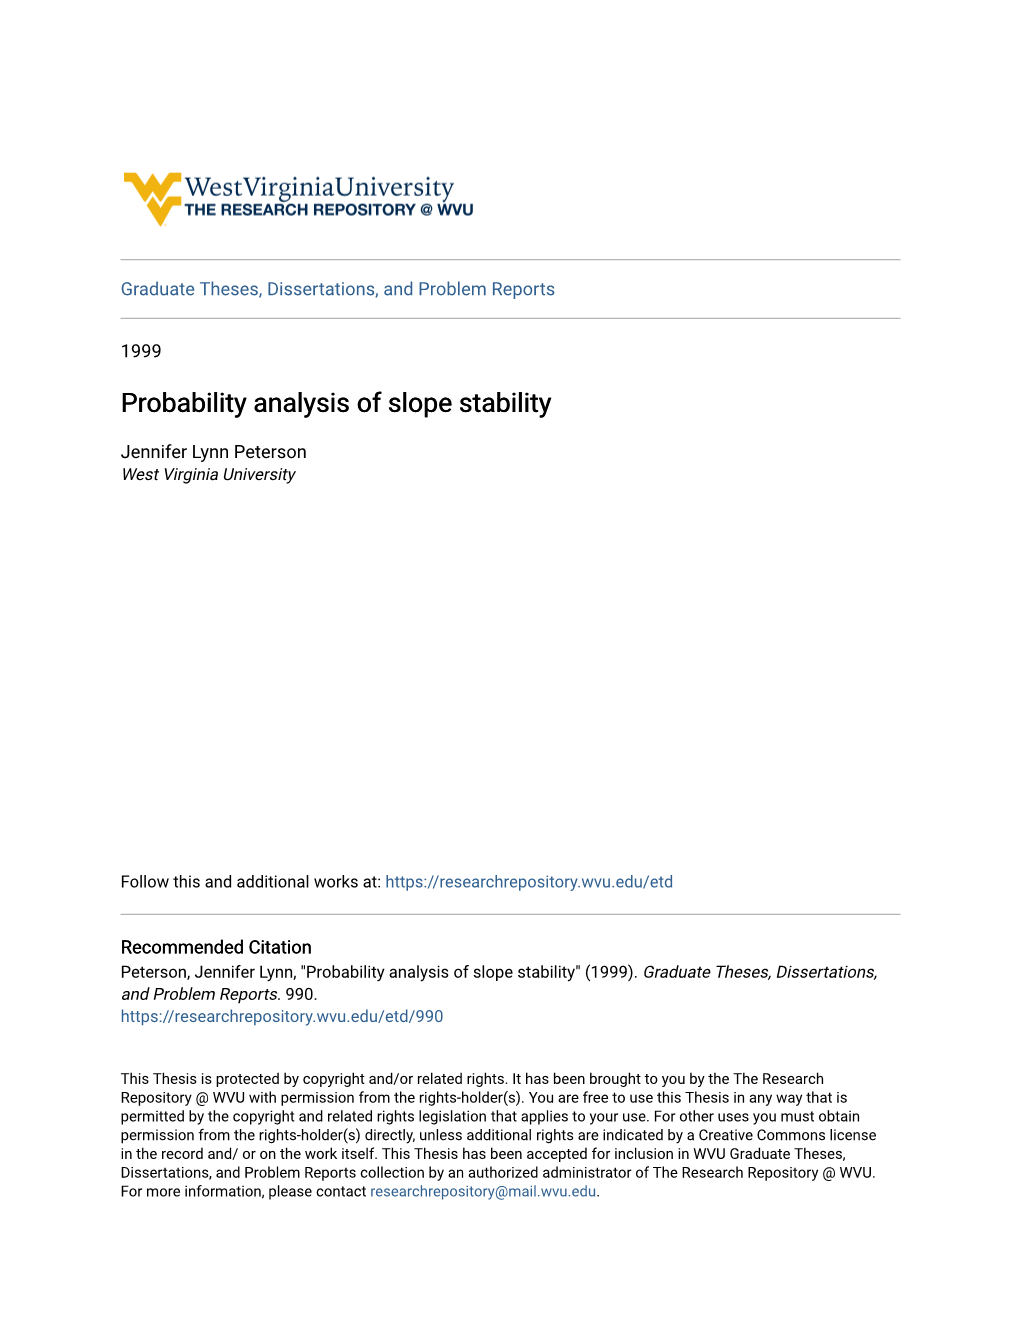 Probability Analysis of Slope Stability